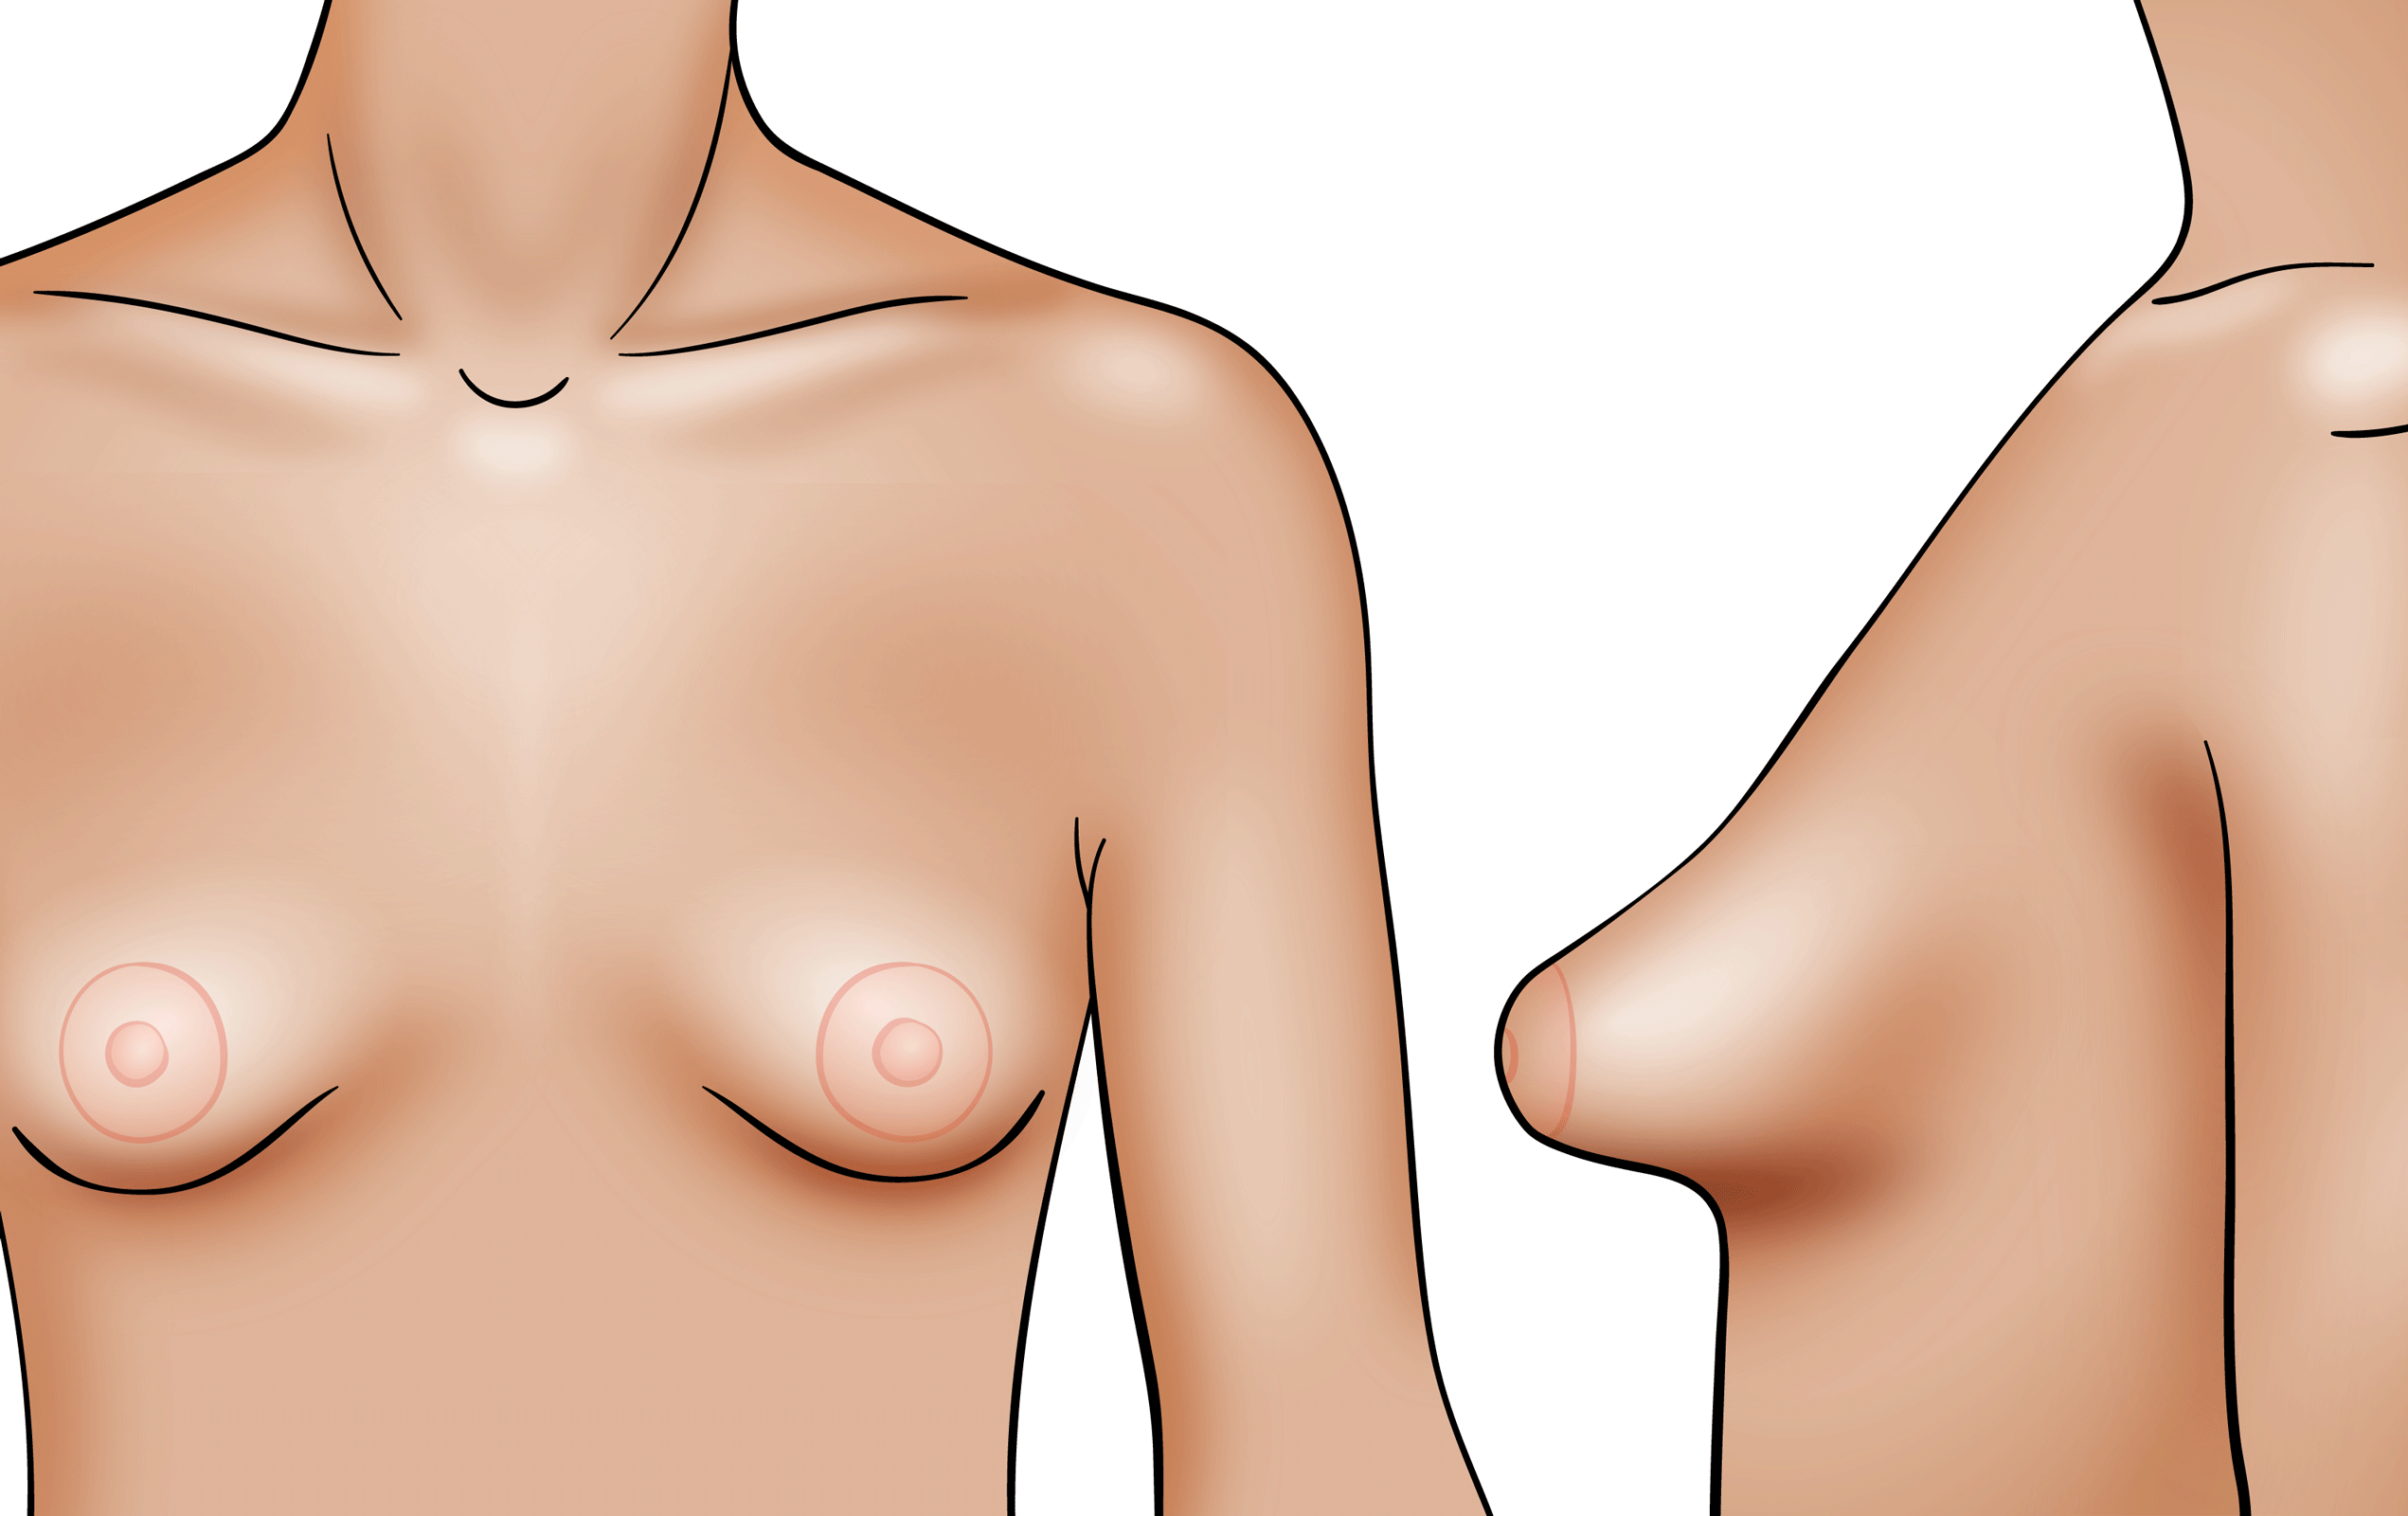 Saggy tube tits